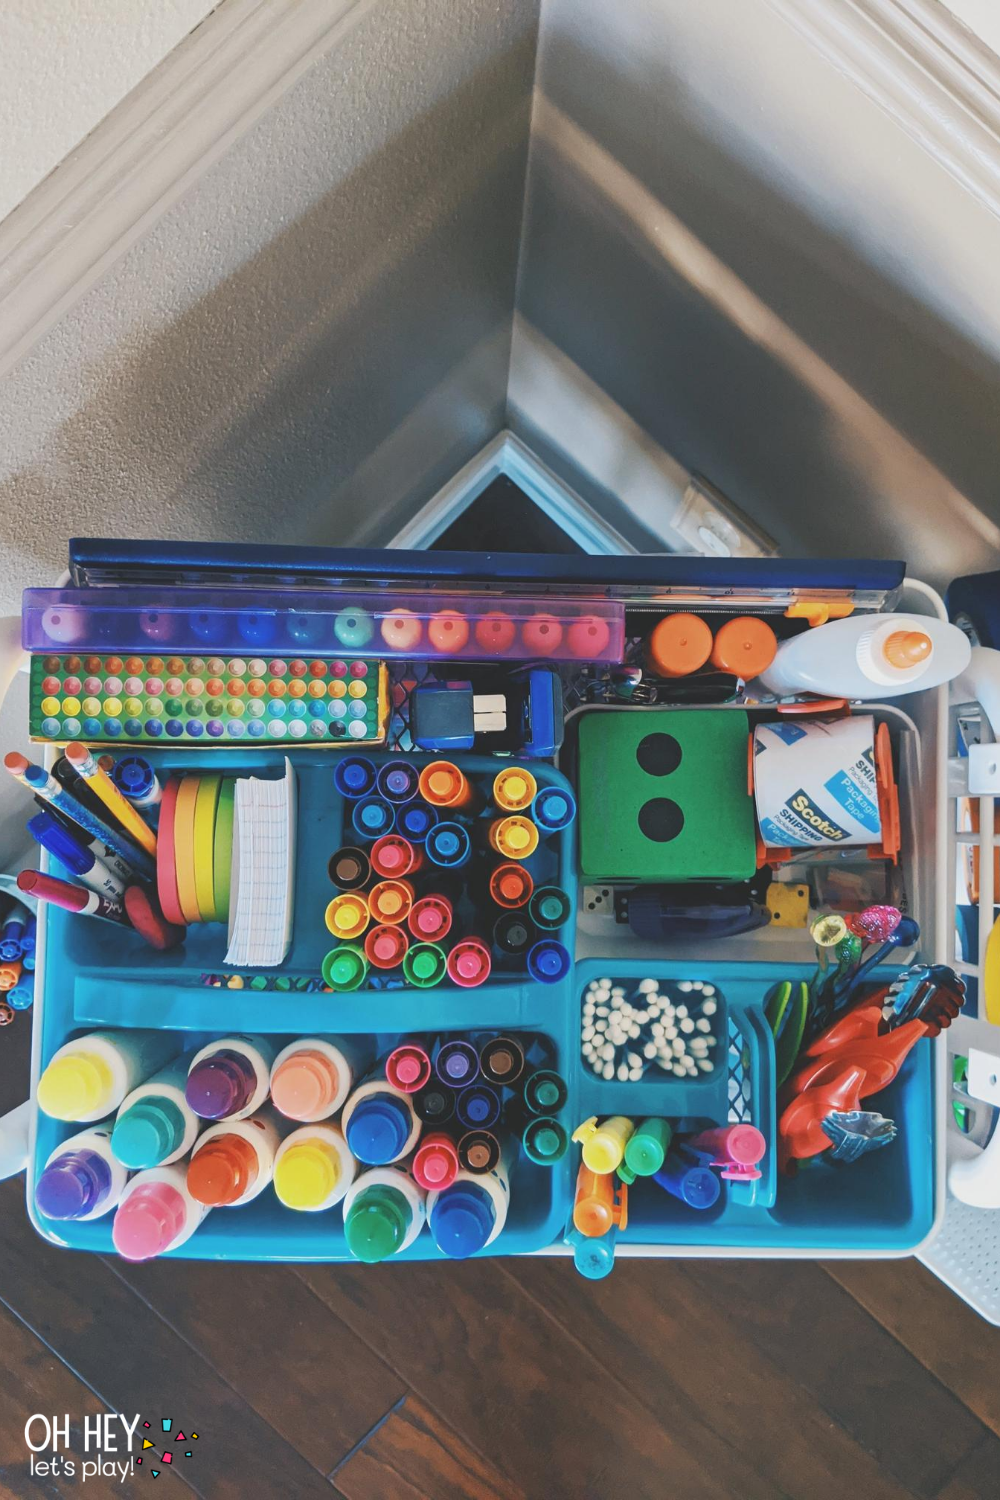 Kids Art Cart, Storage System, and Organization Tips